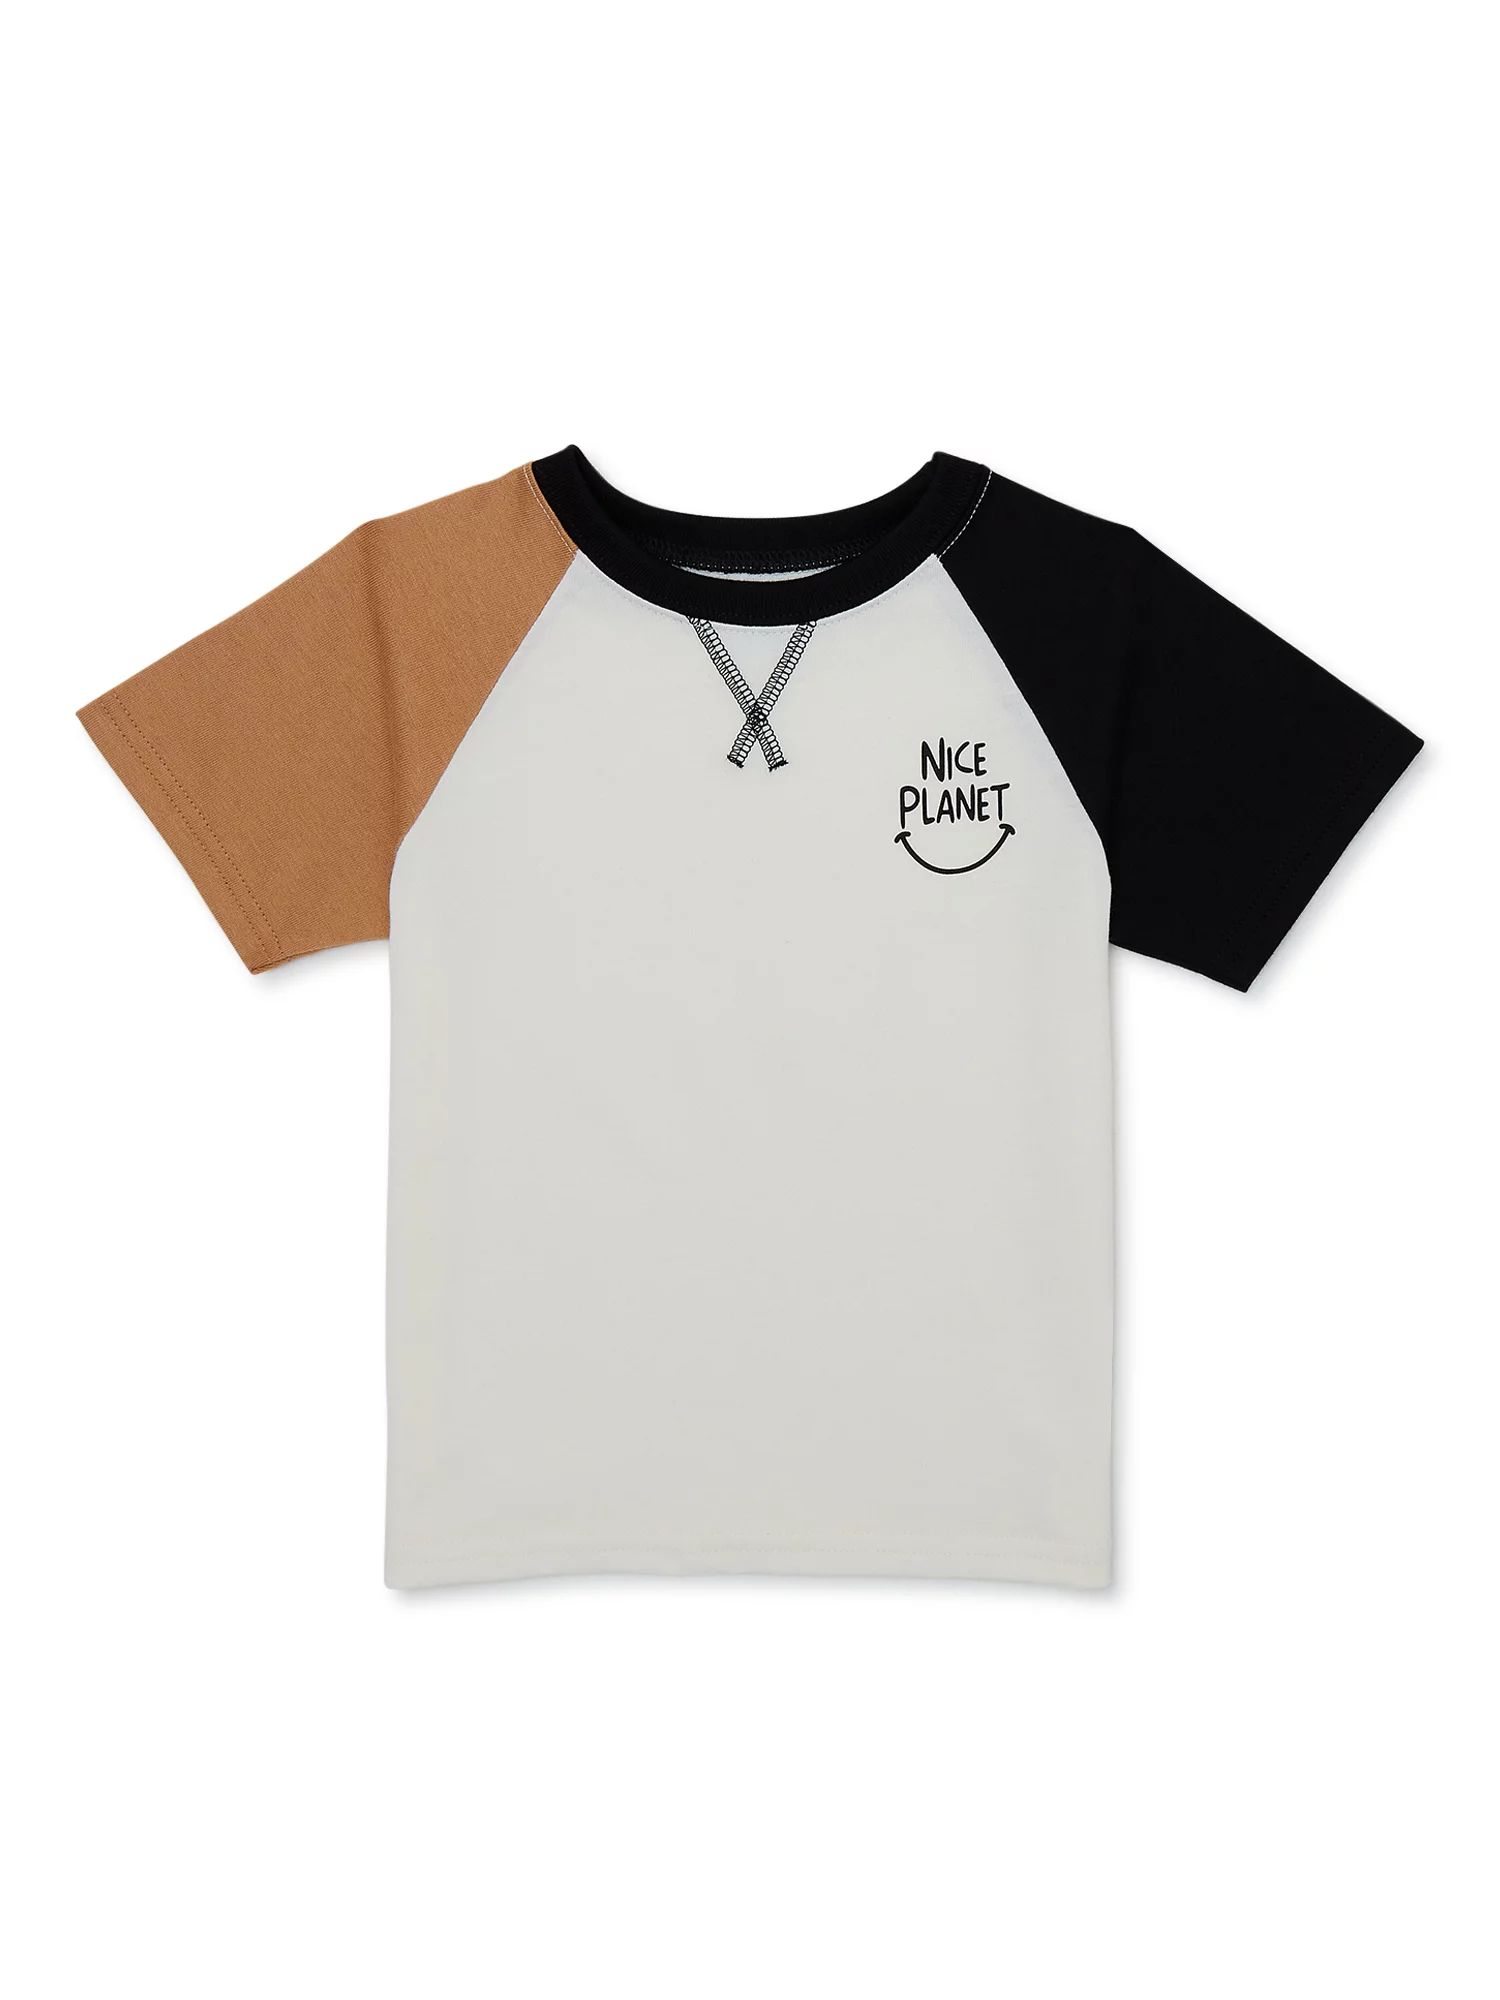 Garanimals Toddler Boys Short Sleeve Graphic T-Shirt, Sizes 12M-5T | Walmart (US)